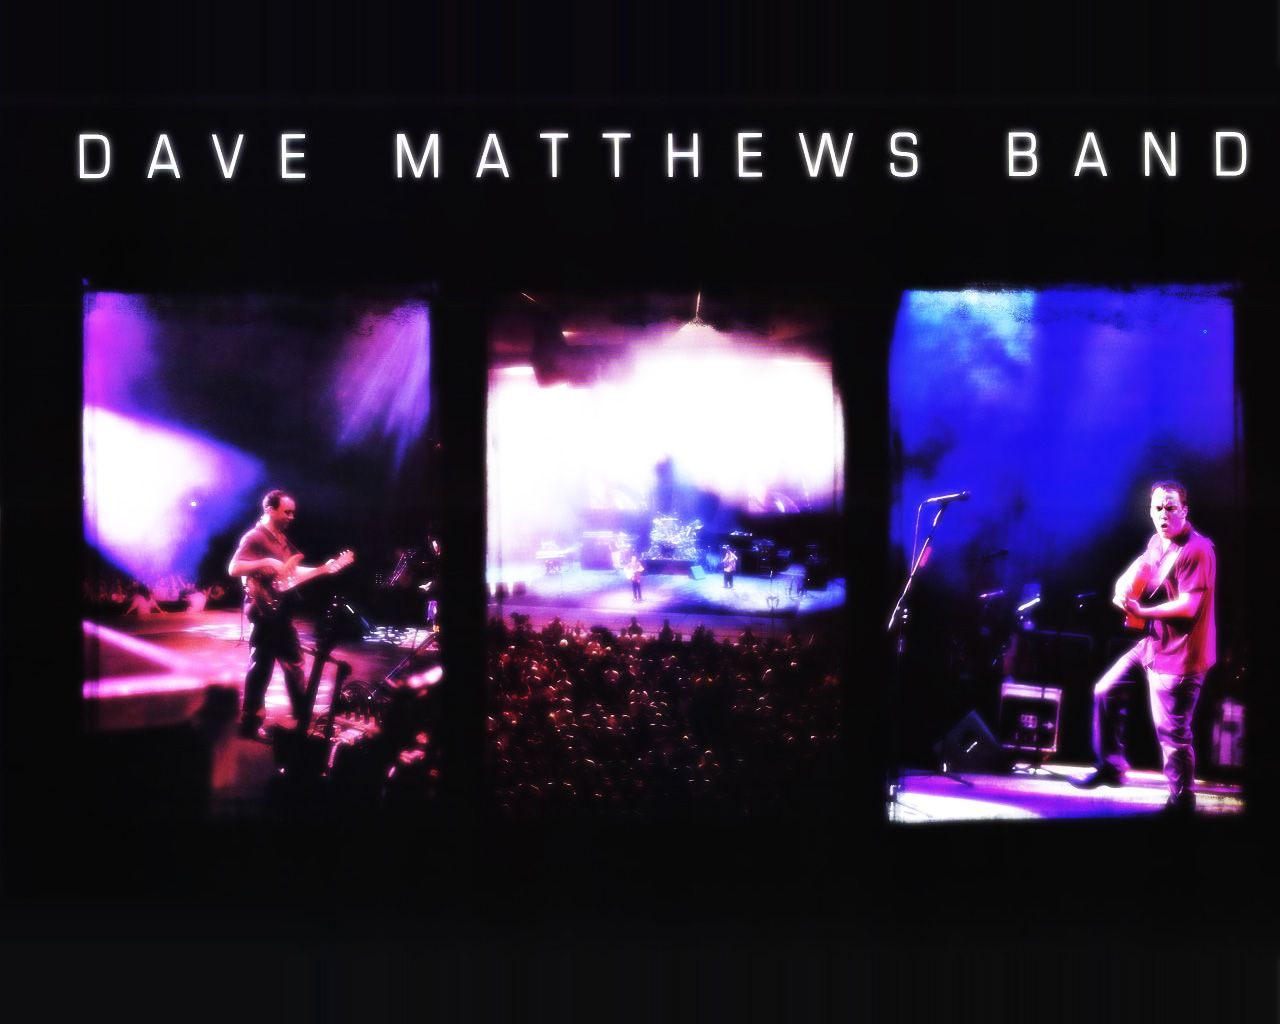 Dave Matthews Band Wallpaper: Dave Matthews Band. Dave matthews band, Dave matthews, Matthews